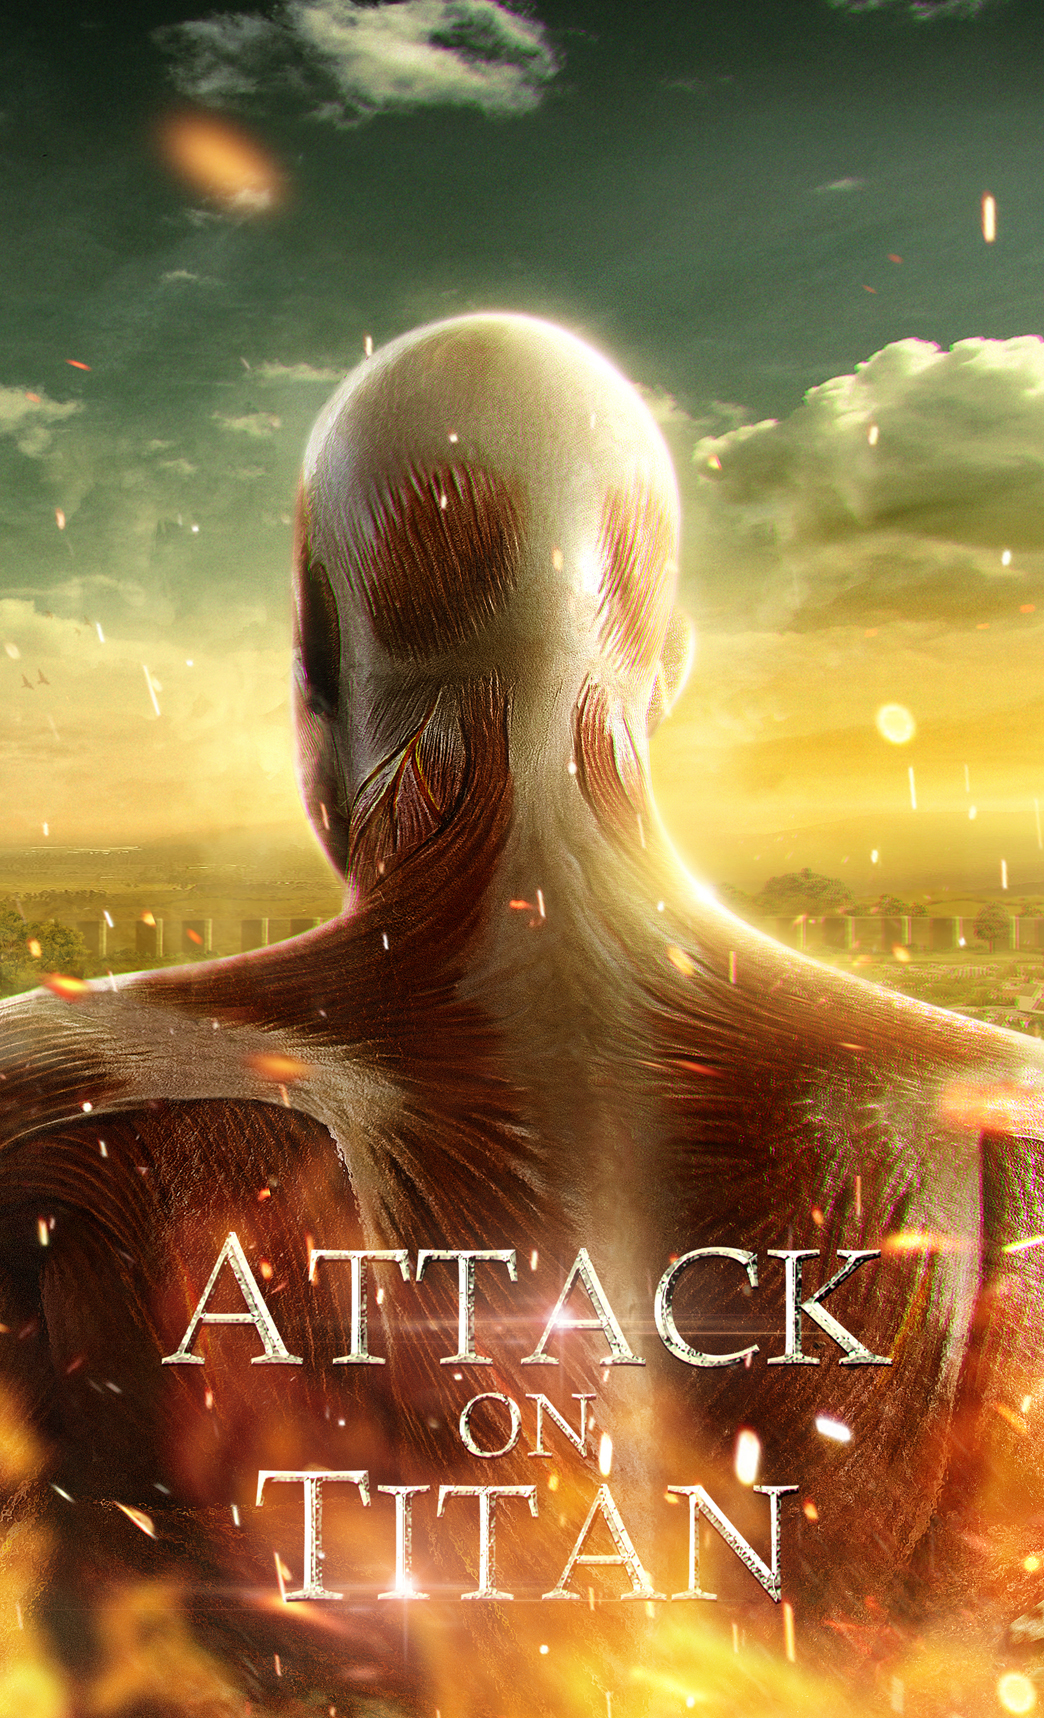 retouch digital art attack on titan